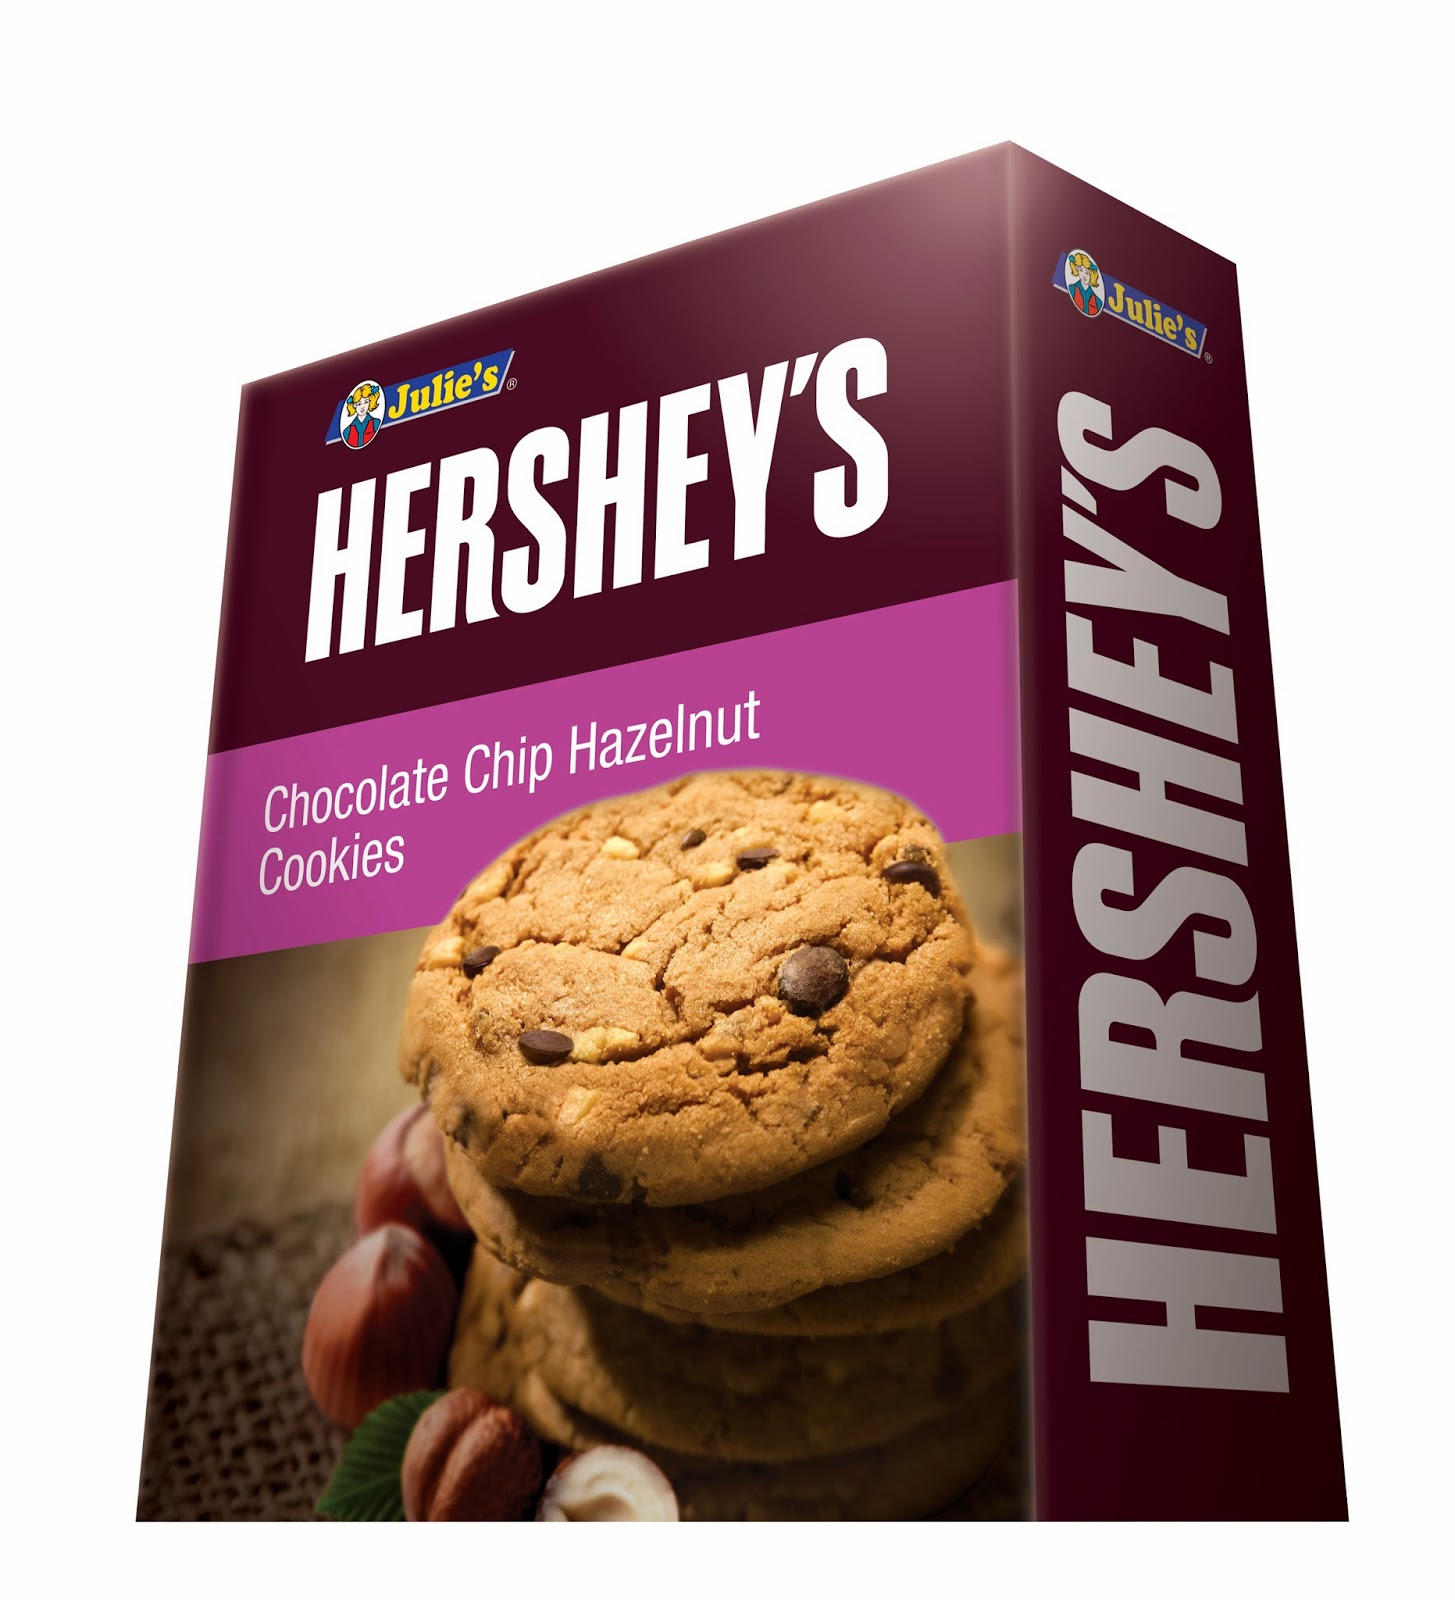 Julie's Hershey's Chocolate Chip Hazelnut Cookies